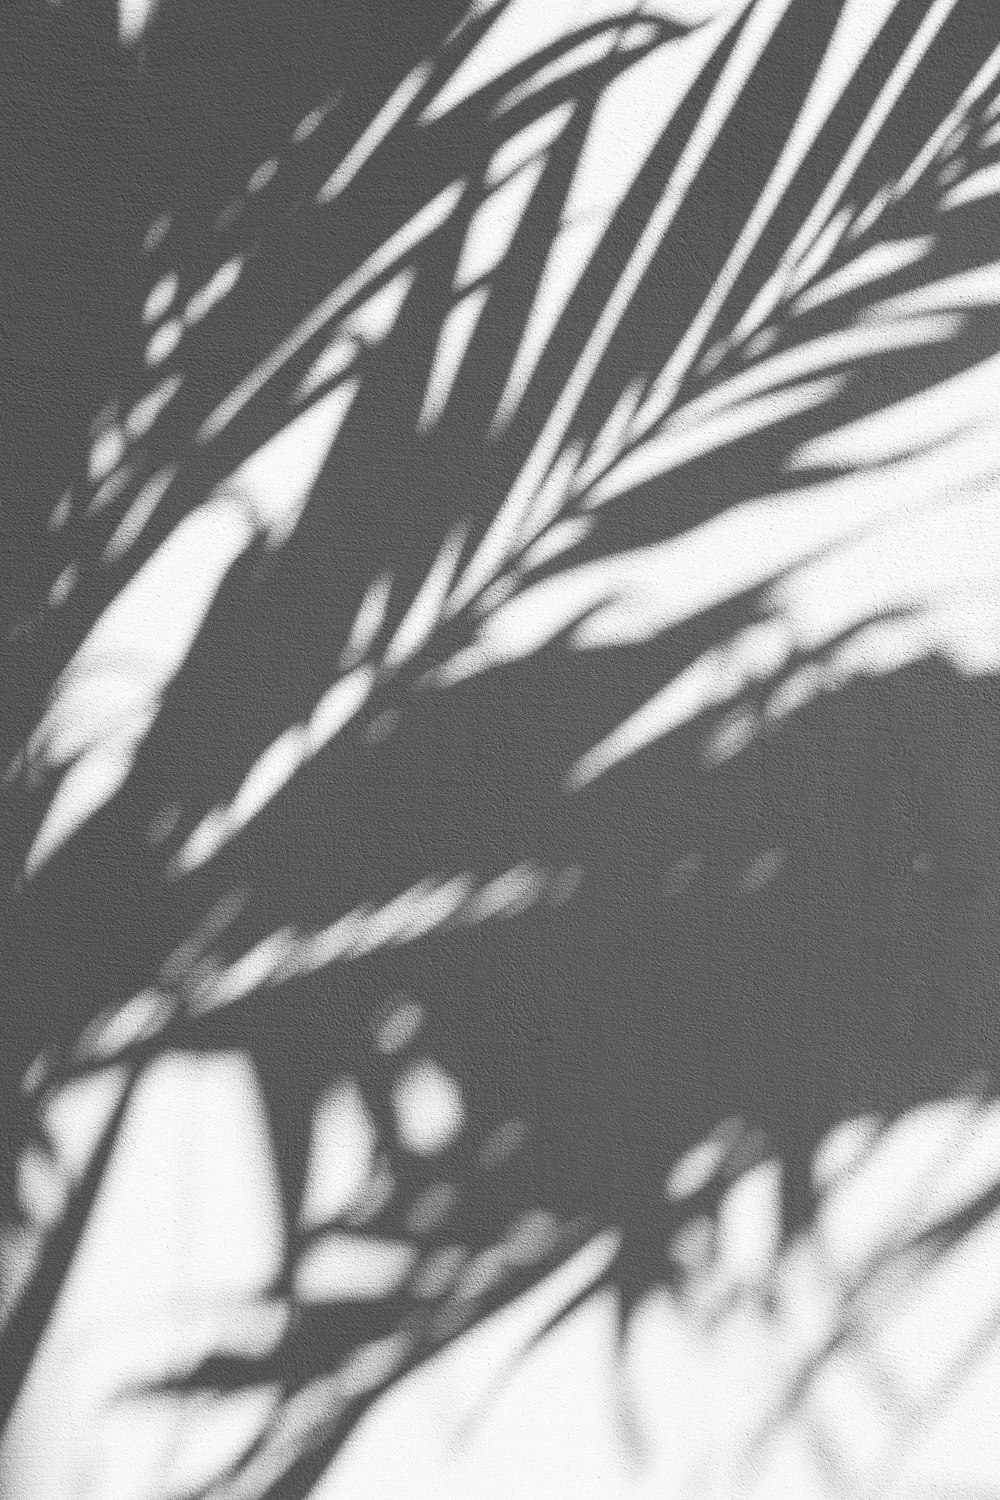 Silhouette der Palme